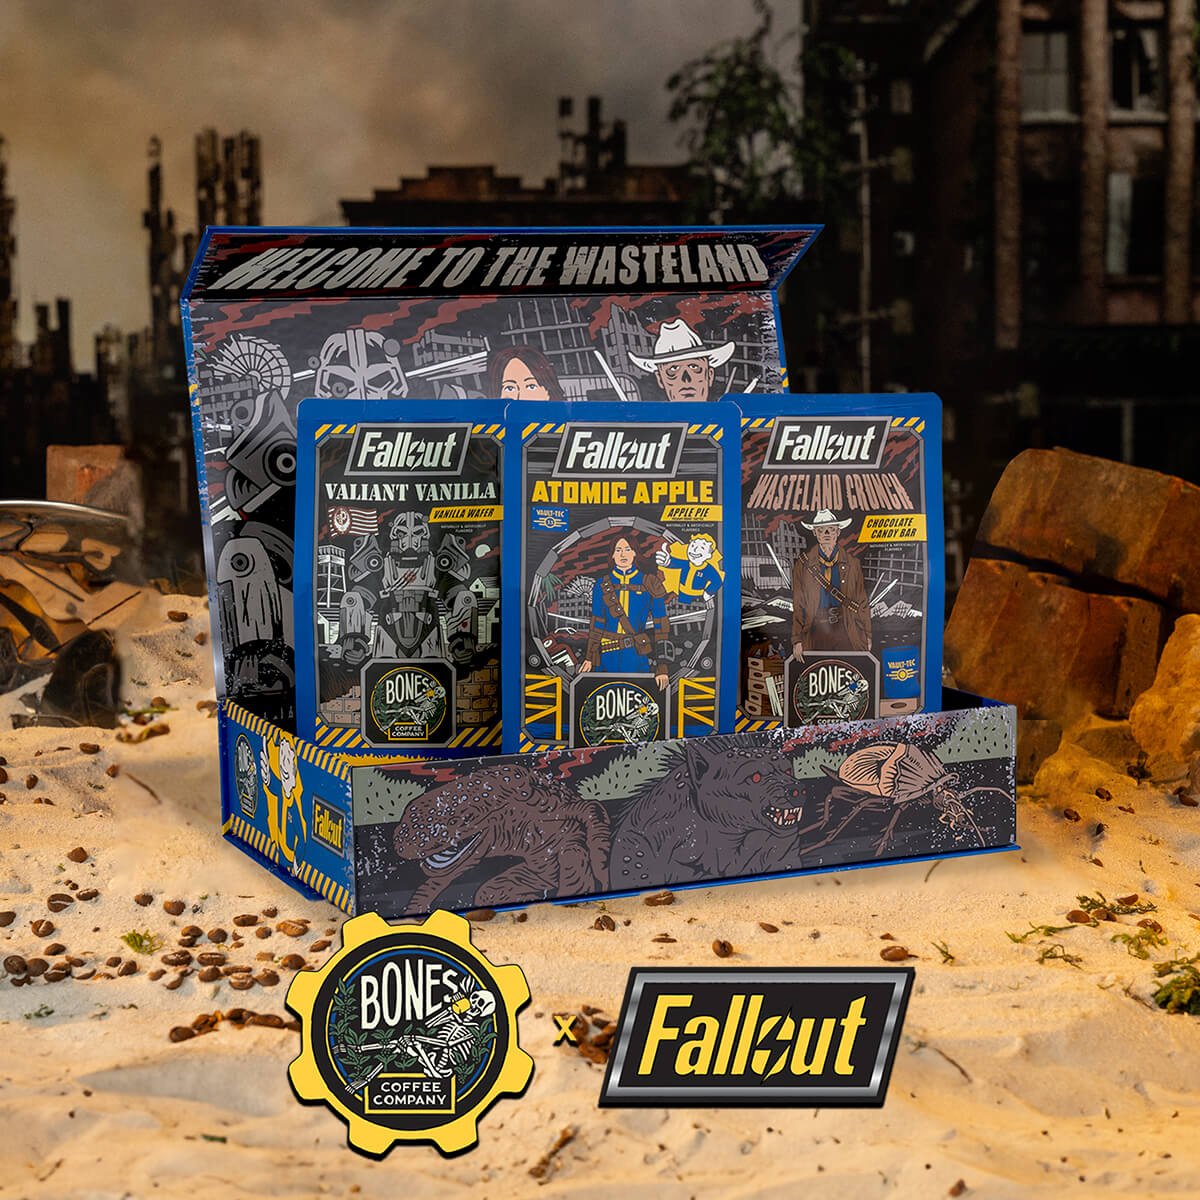 Fallout_and_bones_coffee.jpg